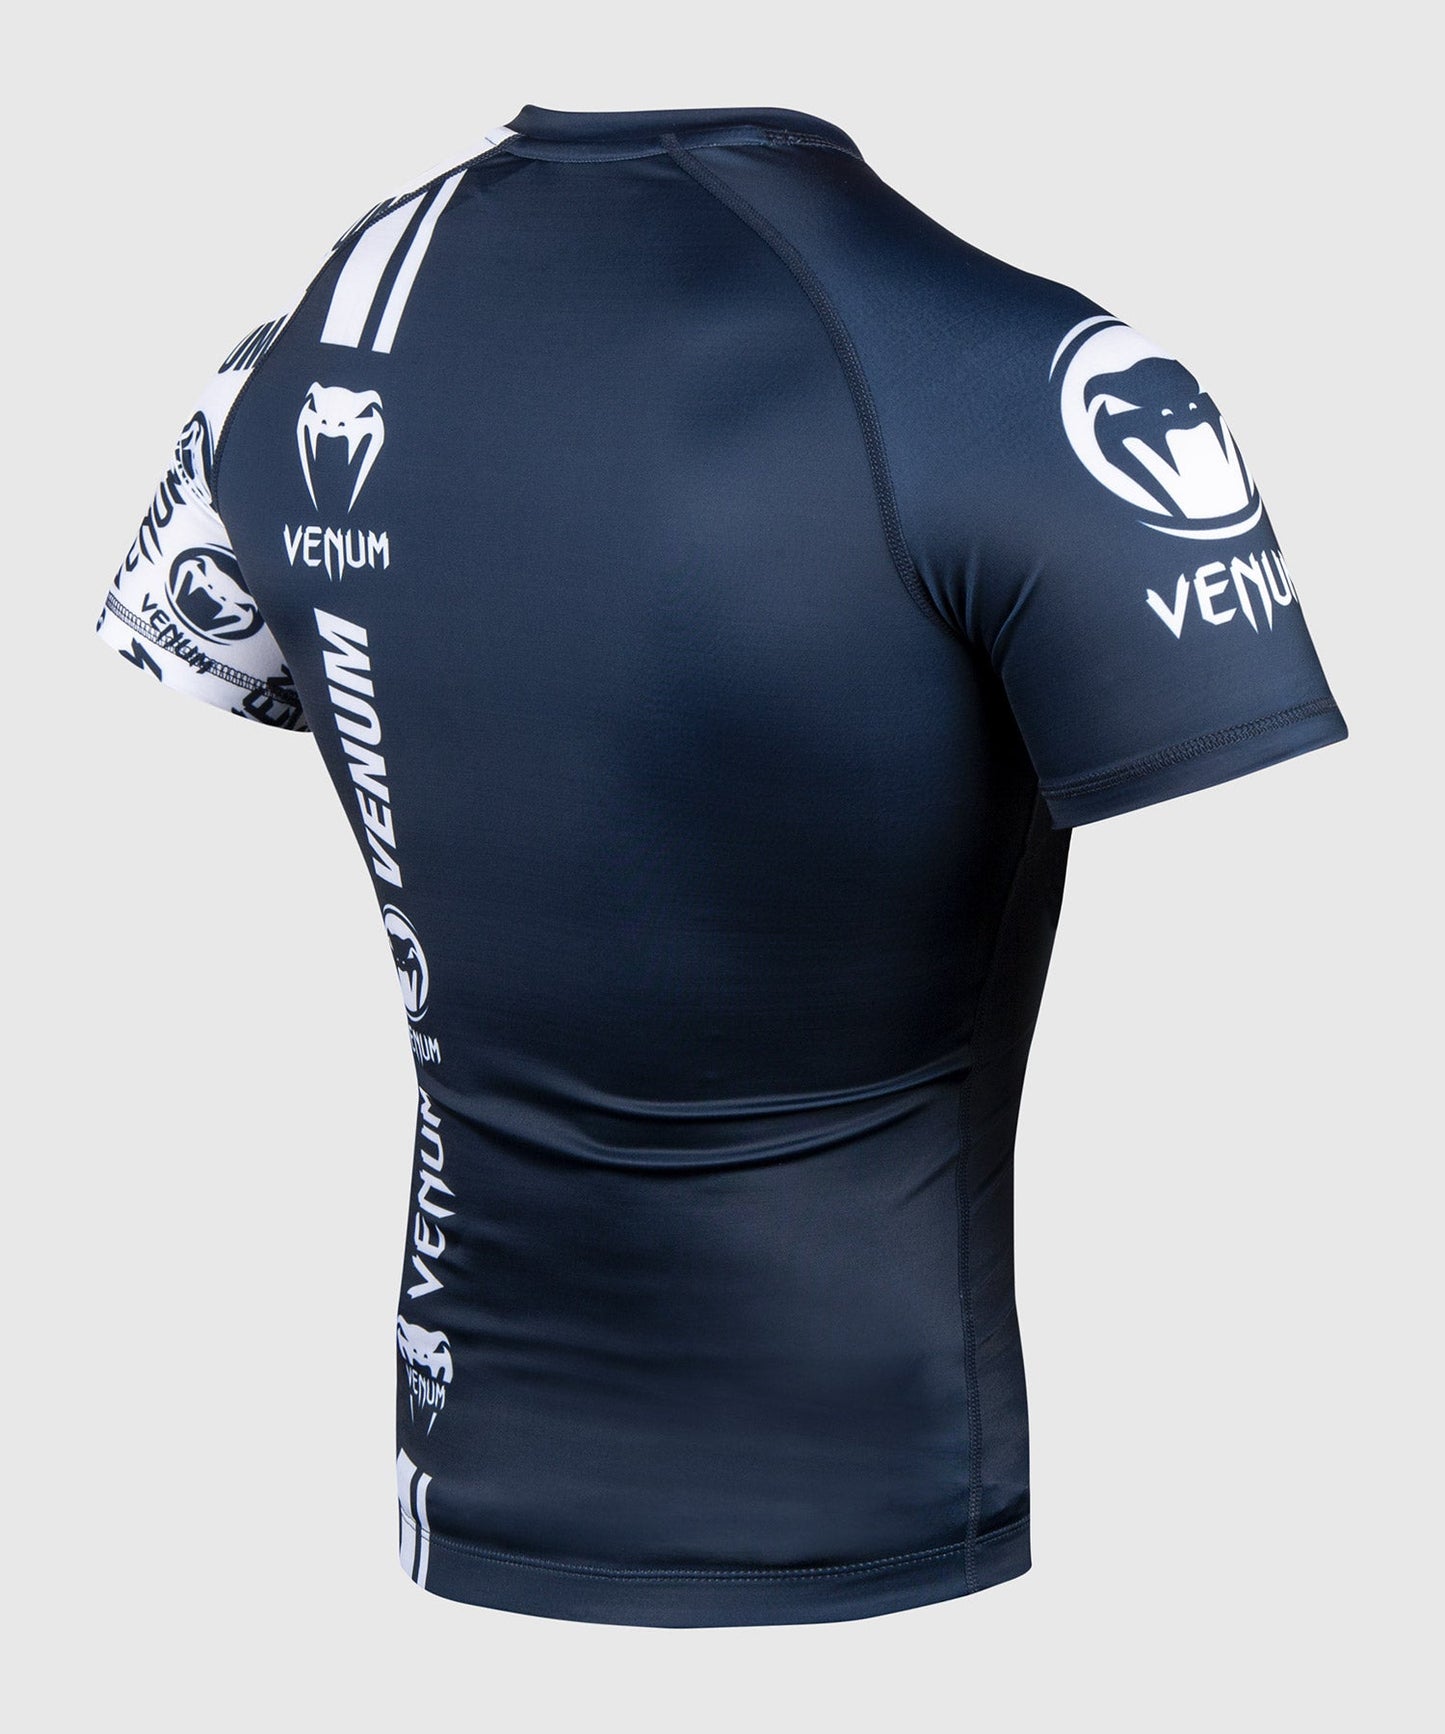 Venum Logos Rashguard - Short Sleeves - Navy Blue/White